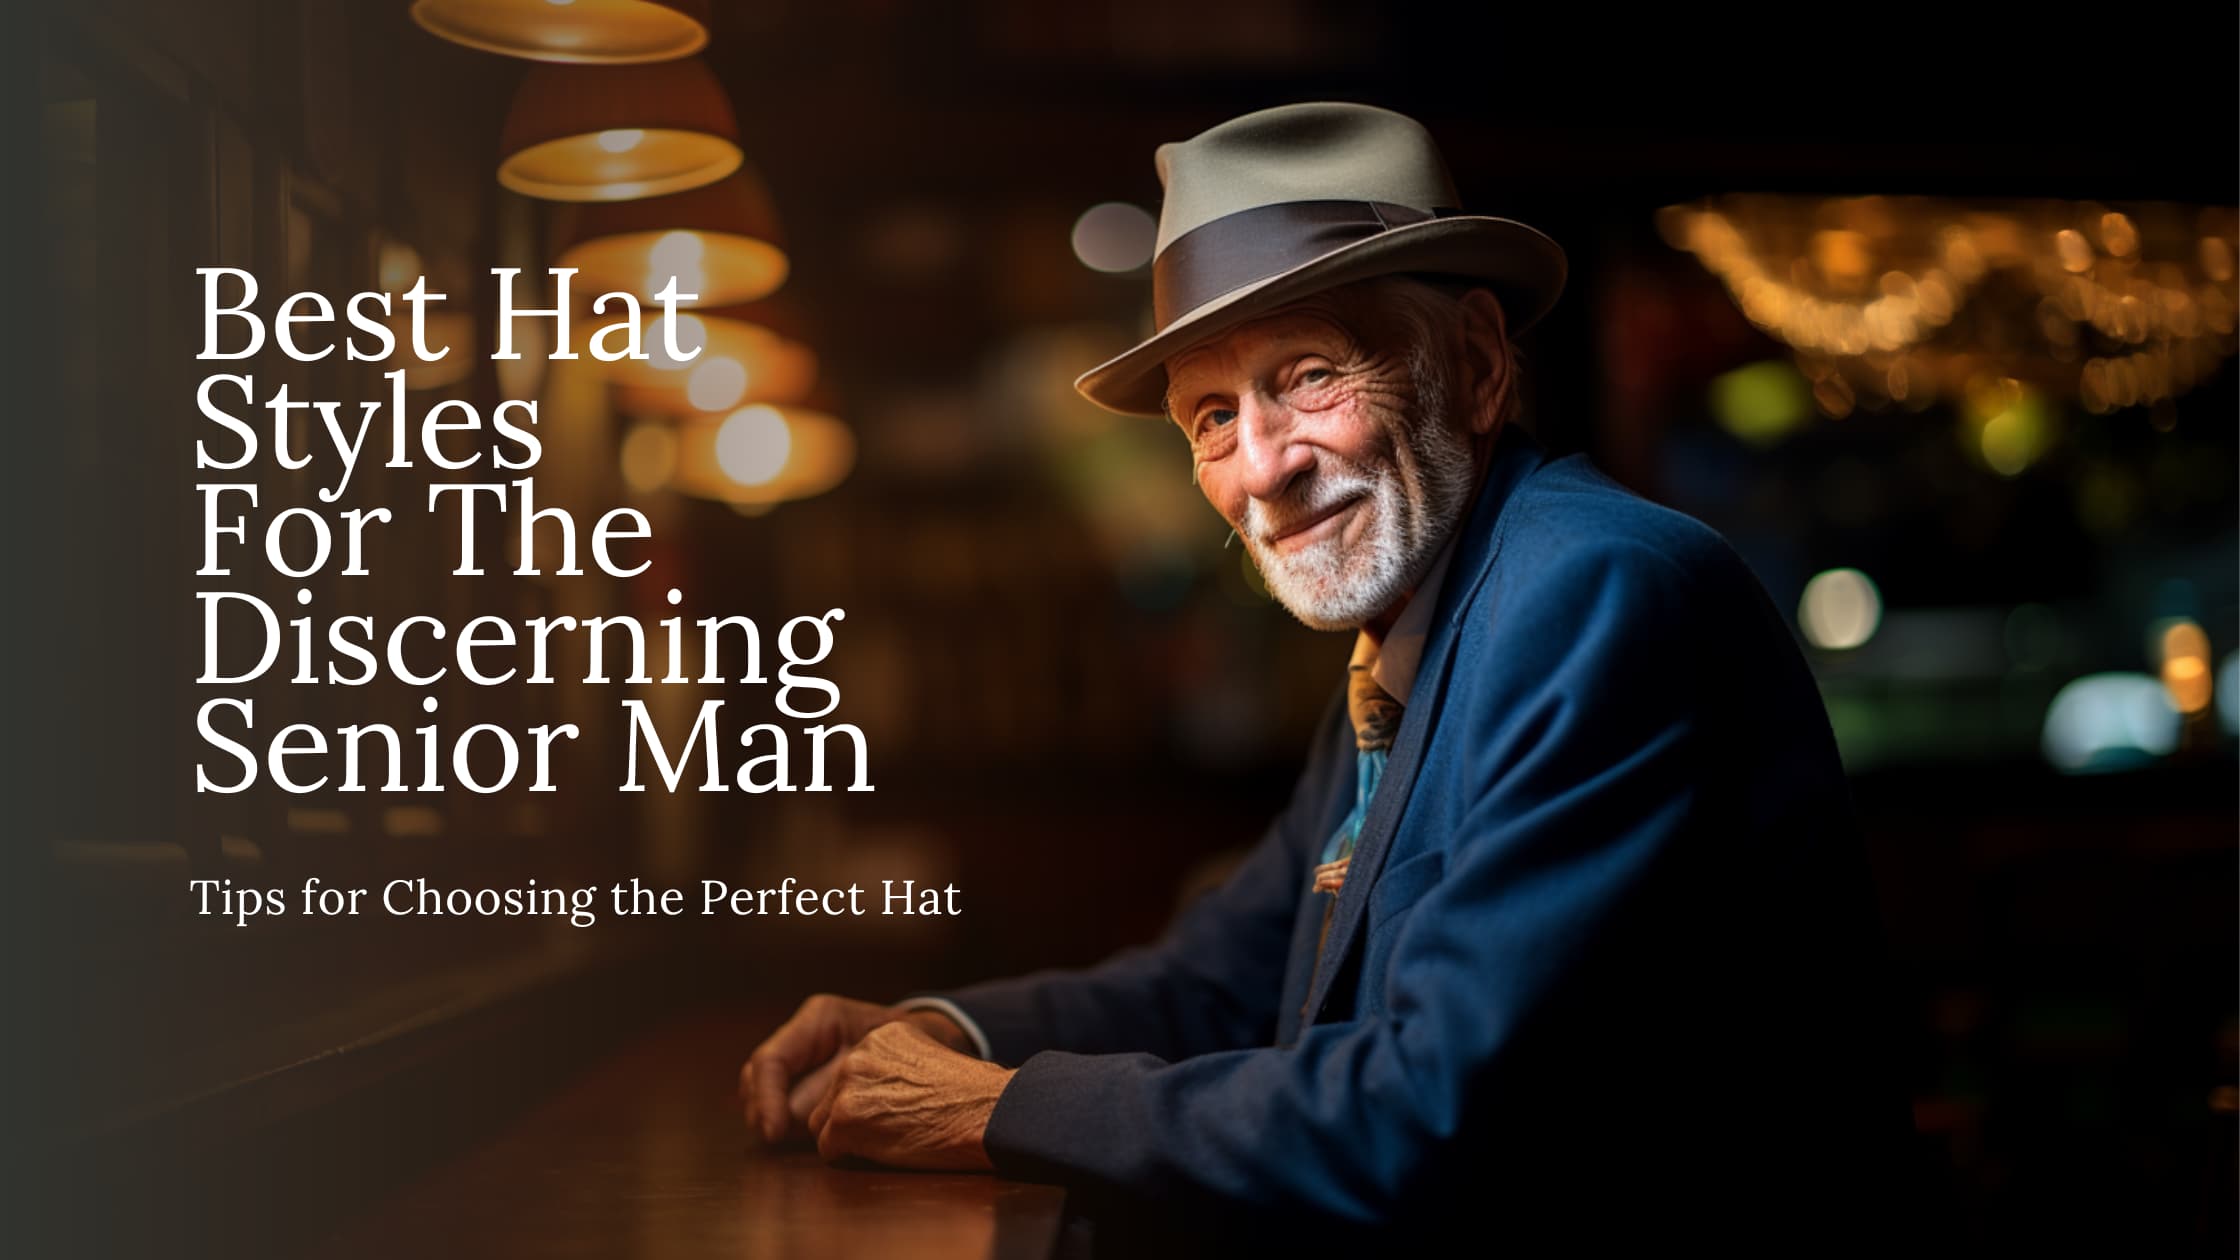 Men And Women Retro Jazz Hat Soild British Sun Hat Travel Sun Hat